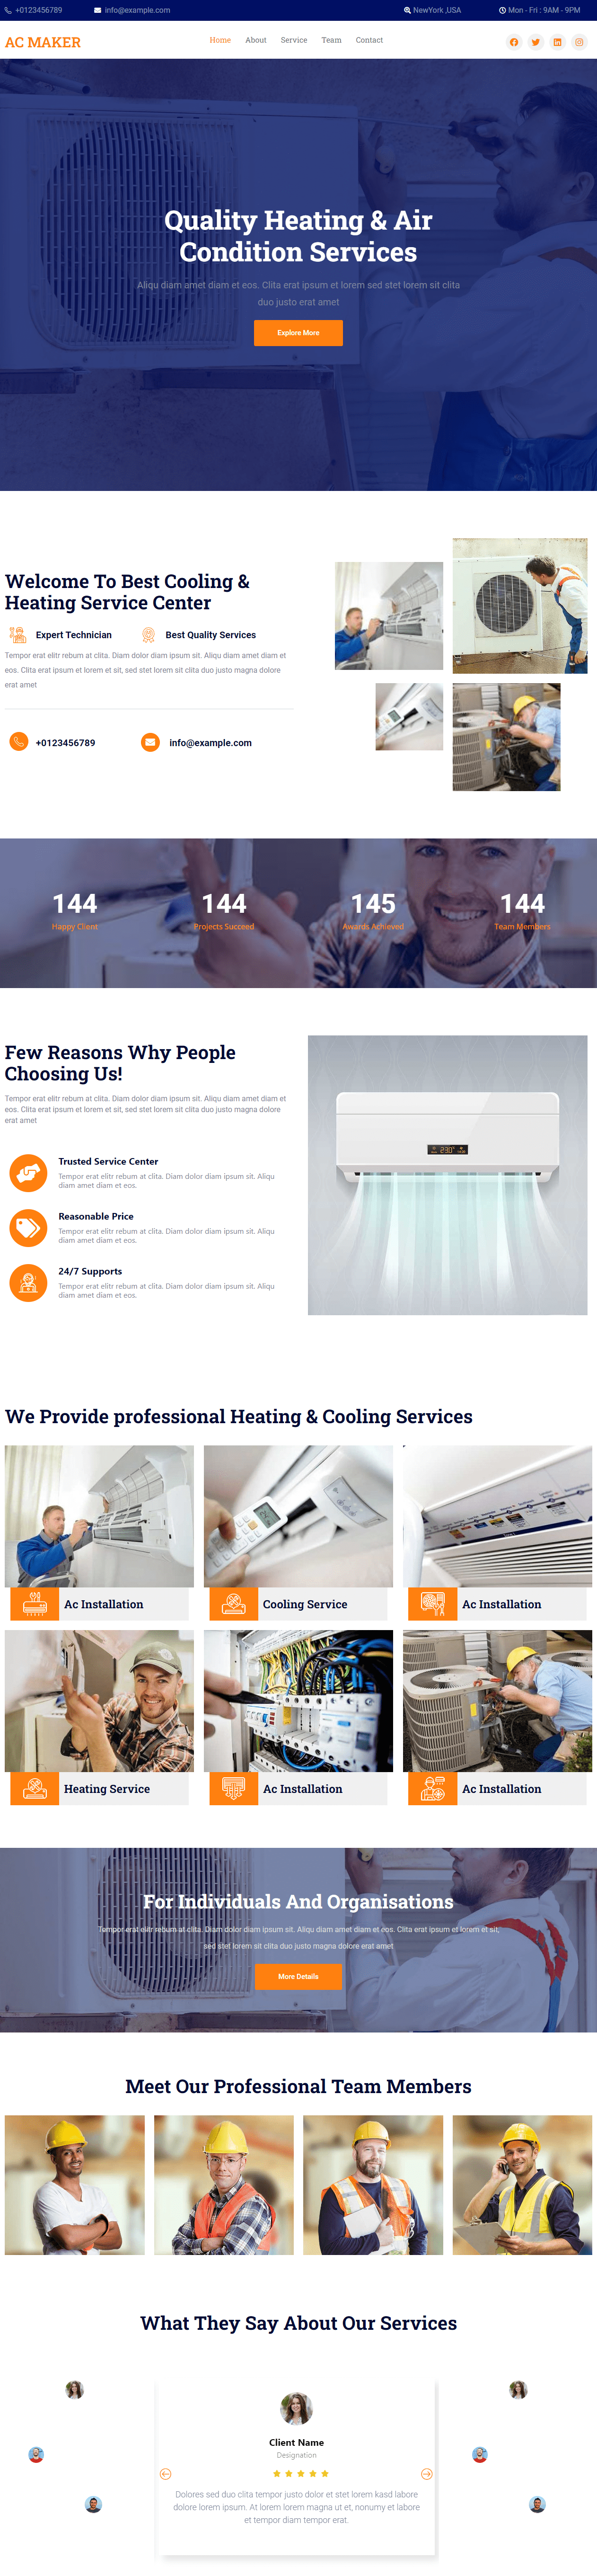 Plumbing, Cooling, Heating-website-template-1